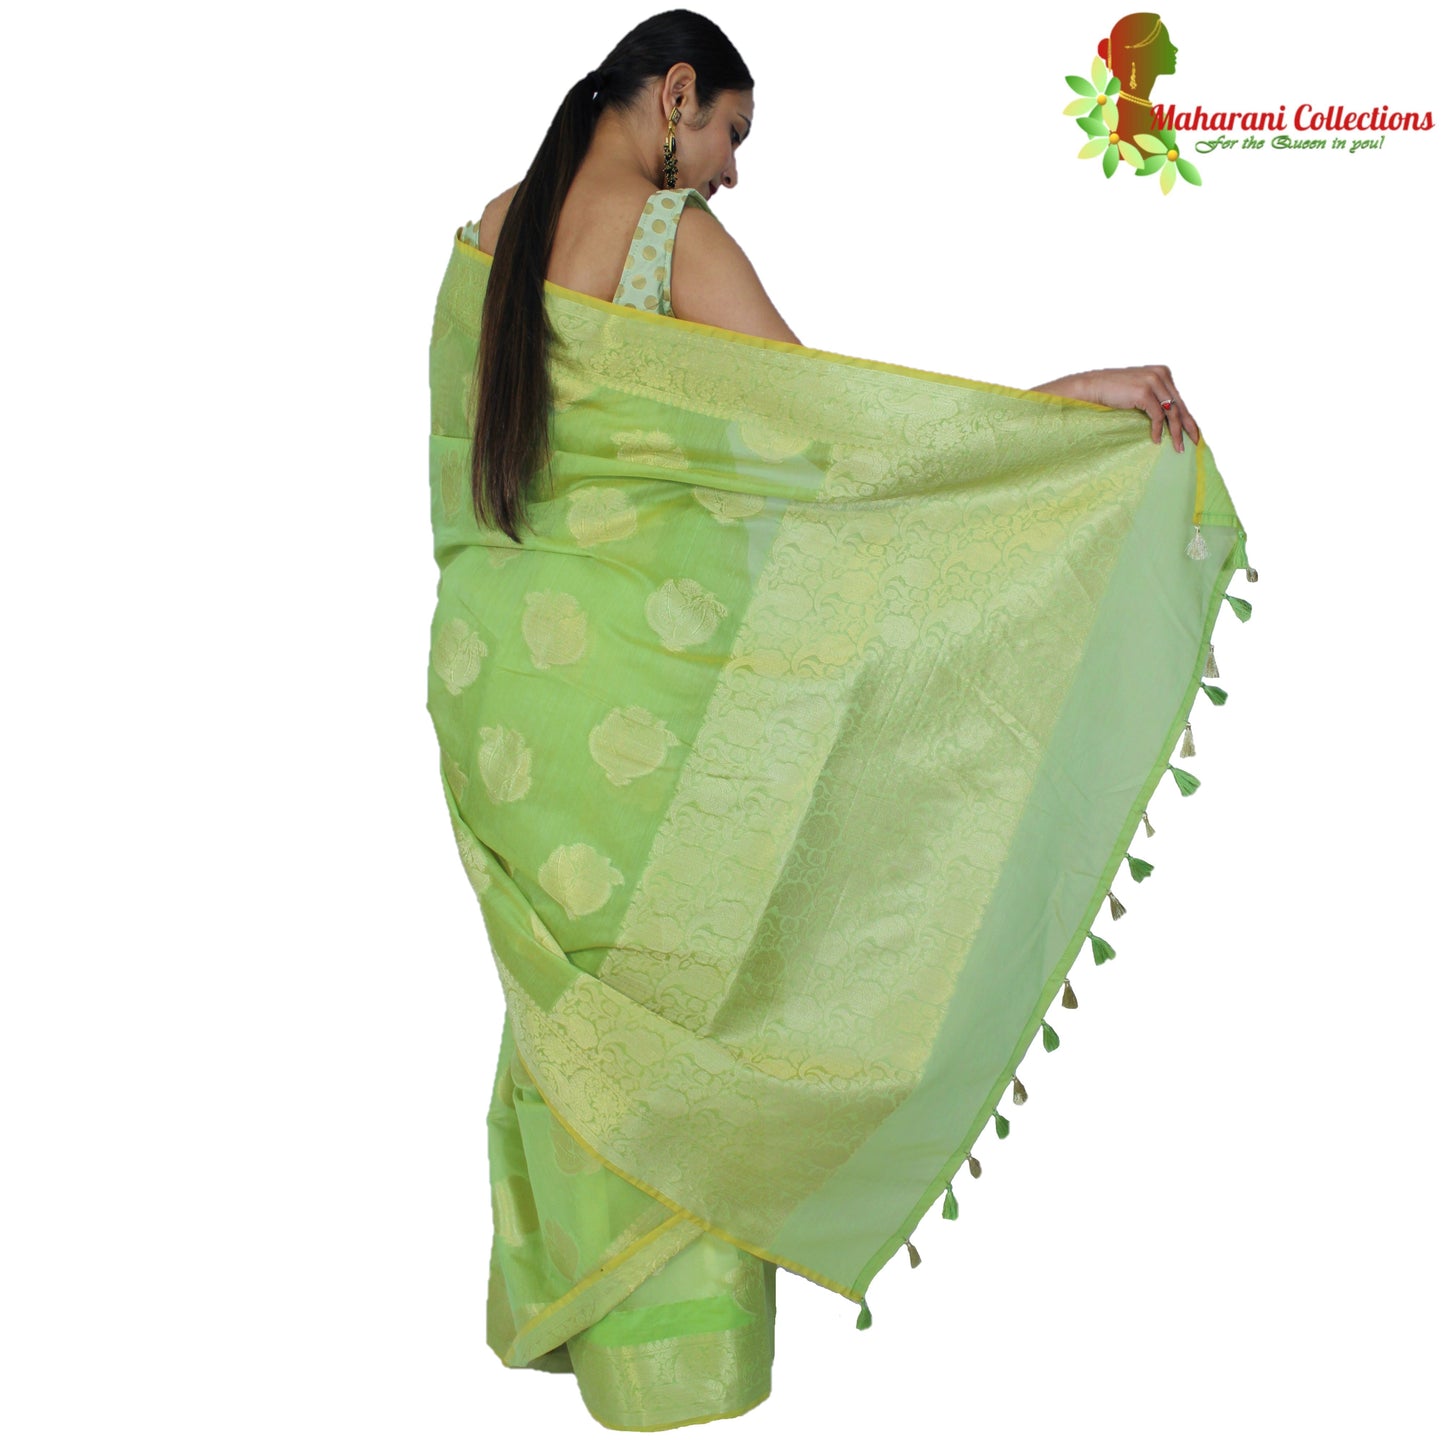 Maharani's Pure Banarasi Silk Saree - Asparagus Green (with Stitched Blouse and Petticoat)